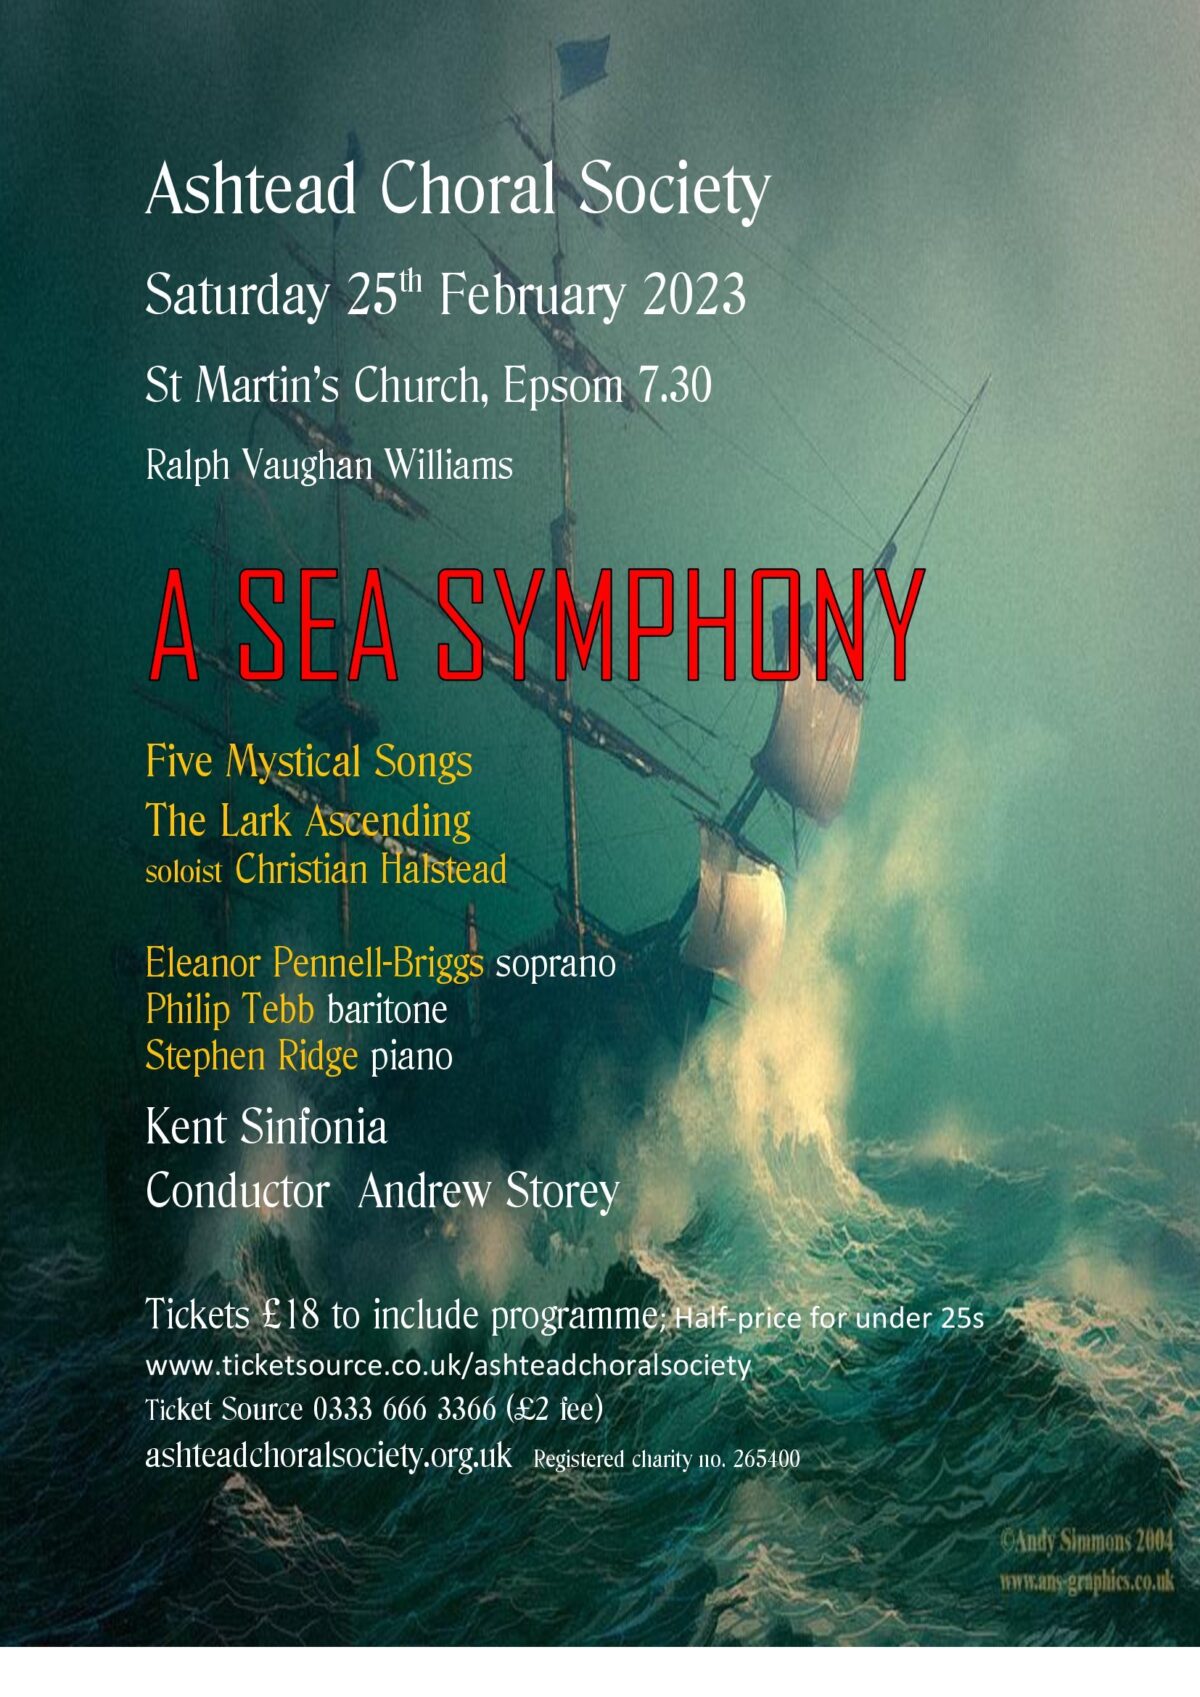 Ashtead Choral Society – A Sea Symphony